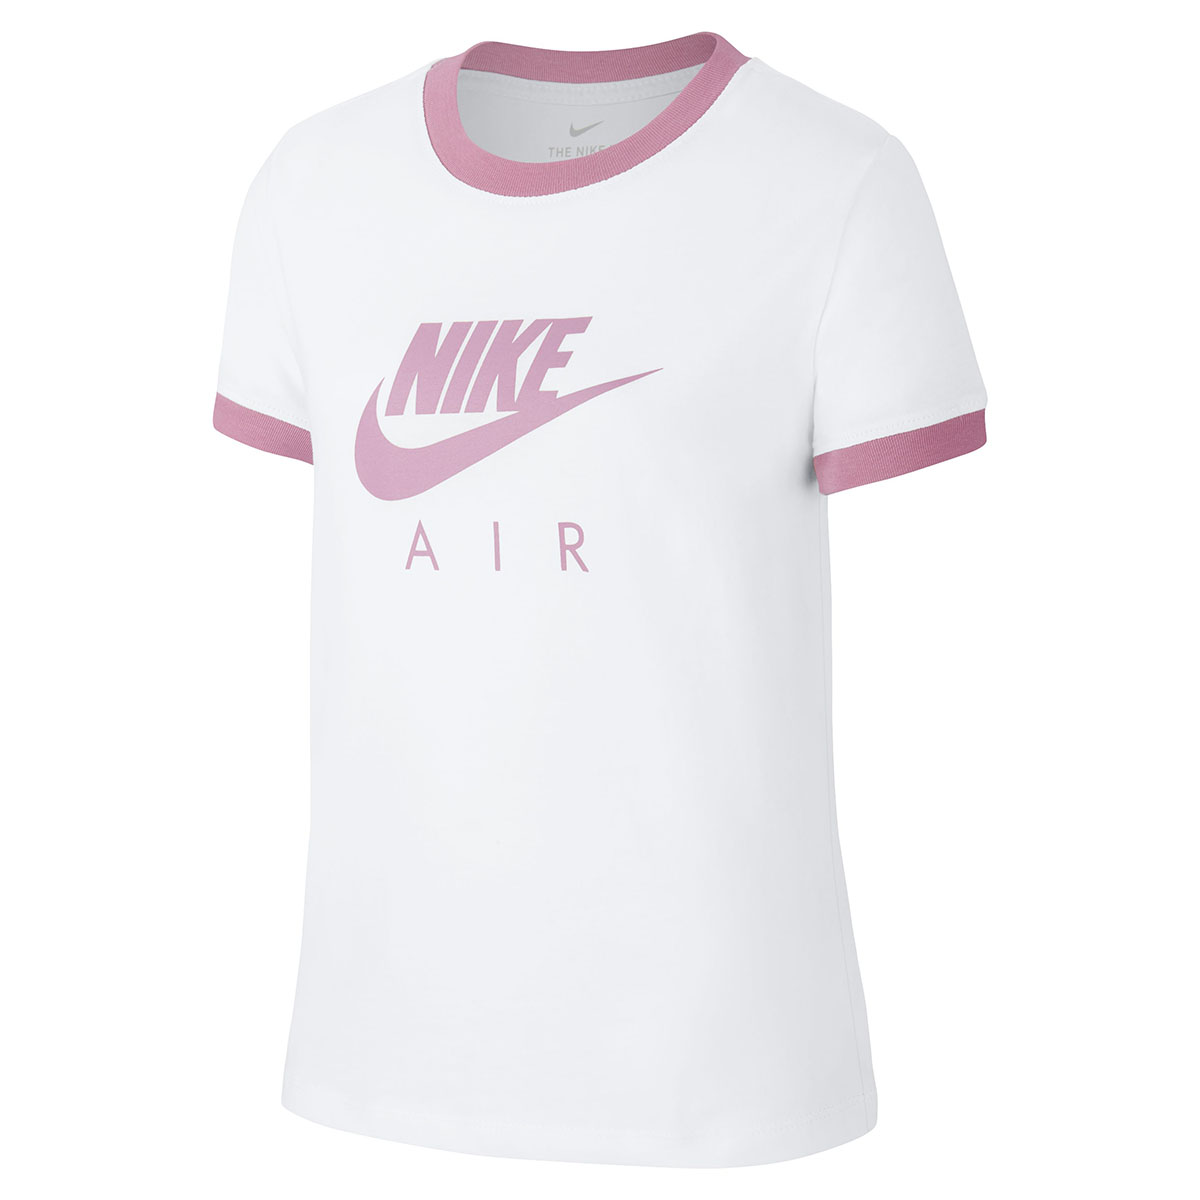 Remera Nike Air,  image number null